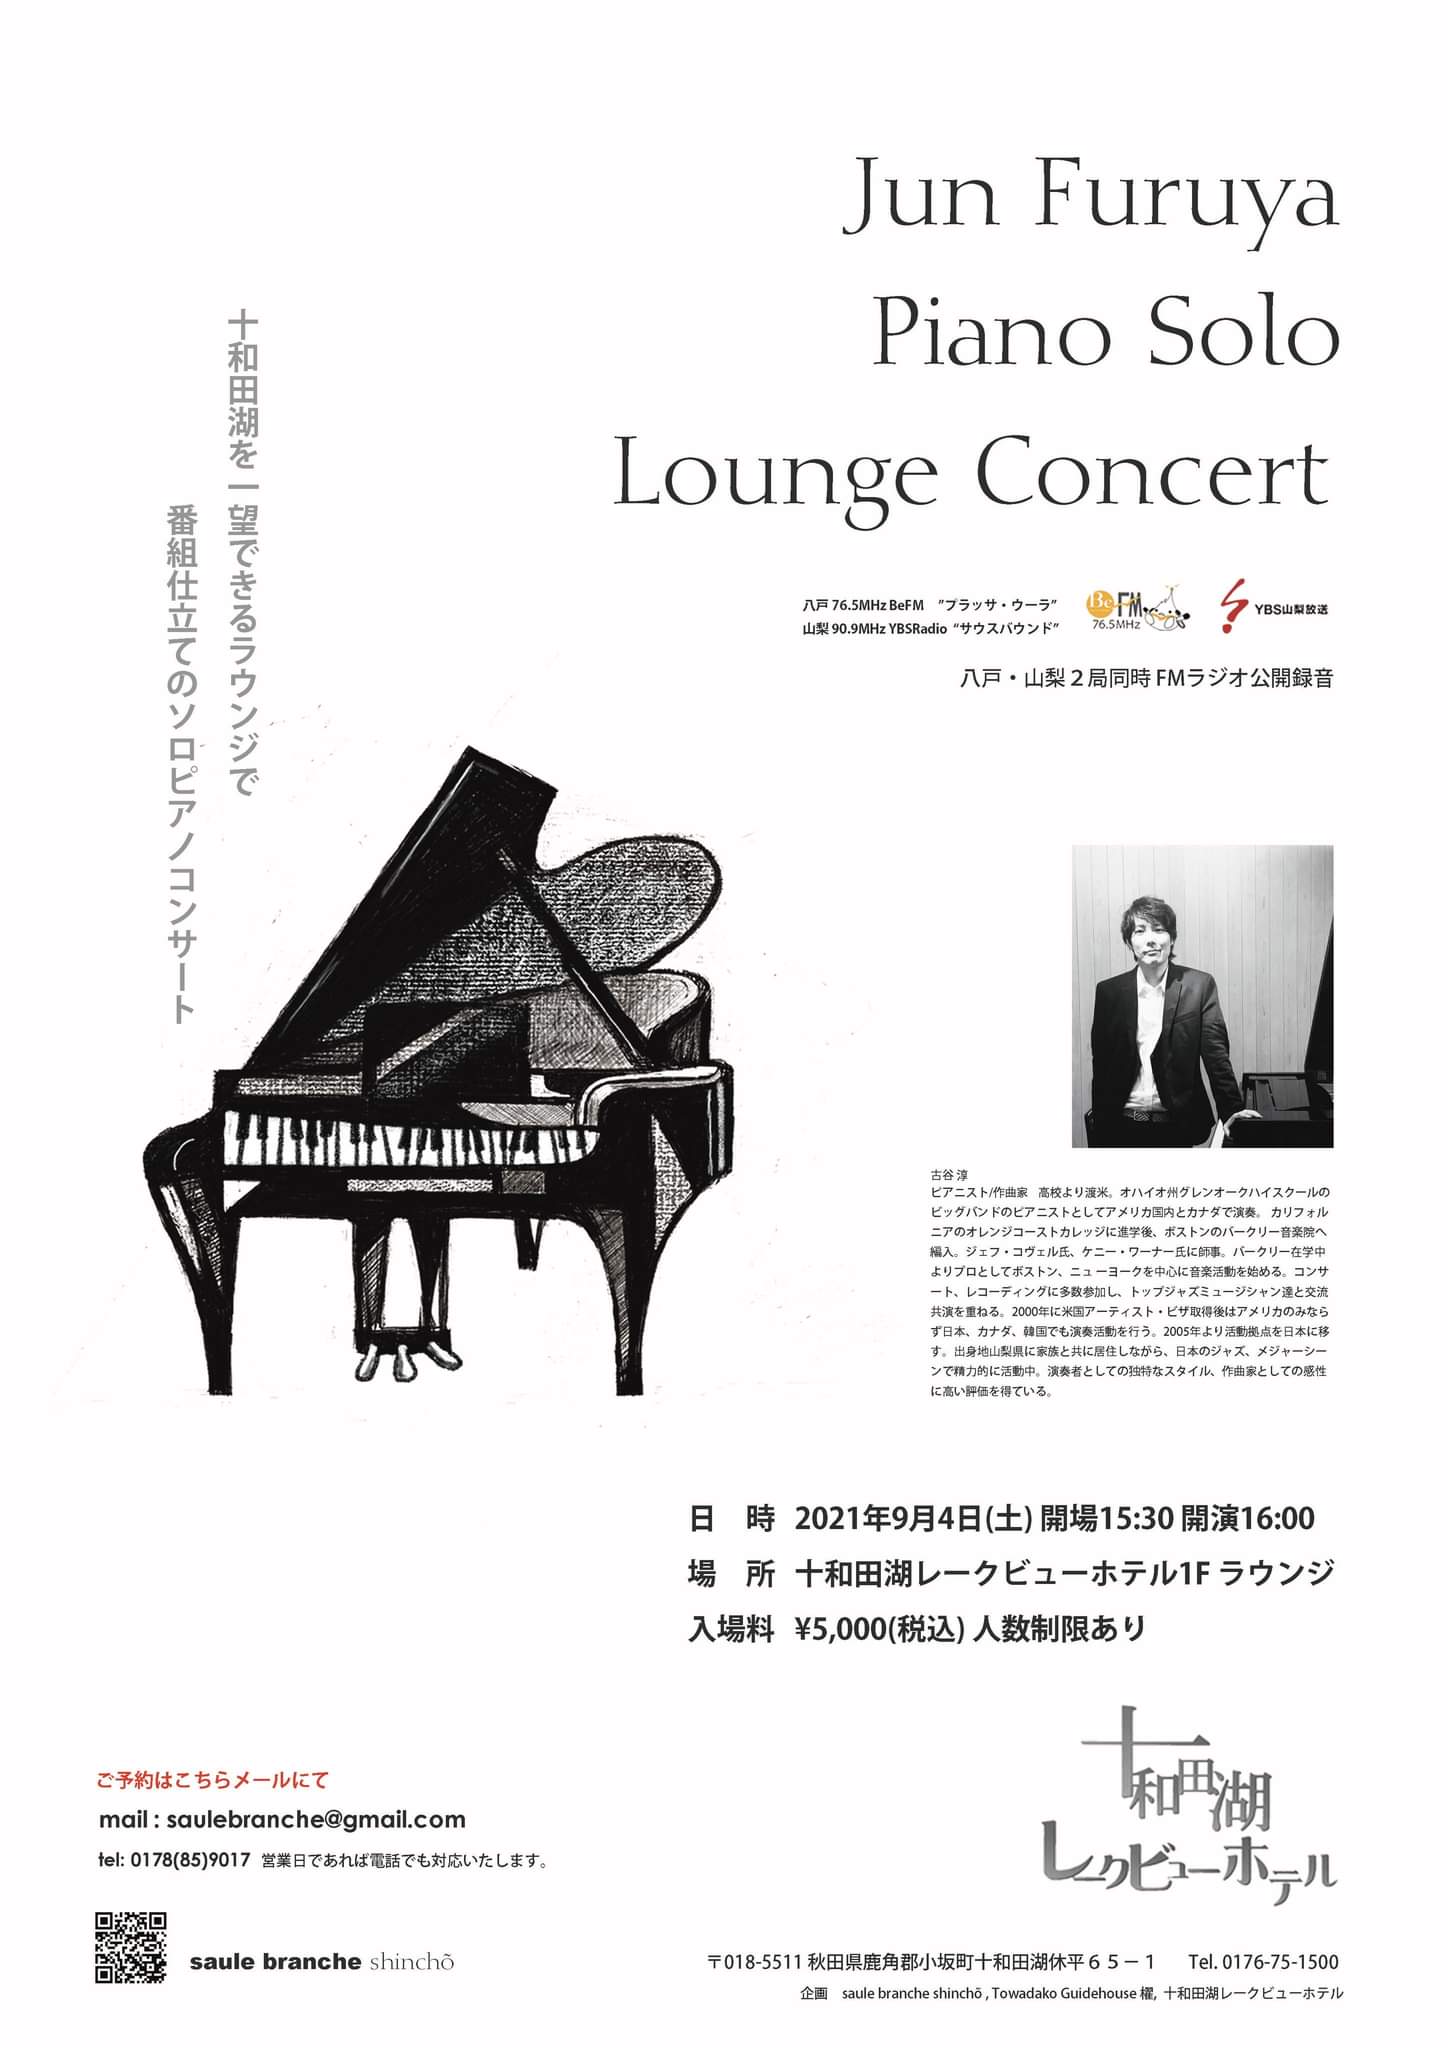 Jun Furuya Piano Solo Lounge Concert